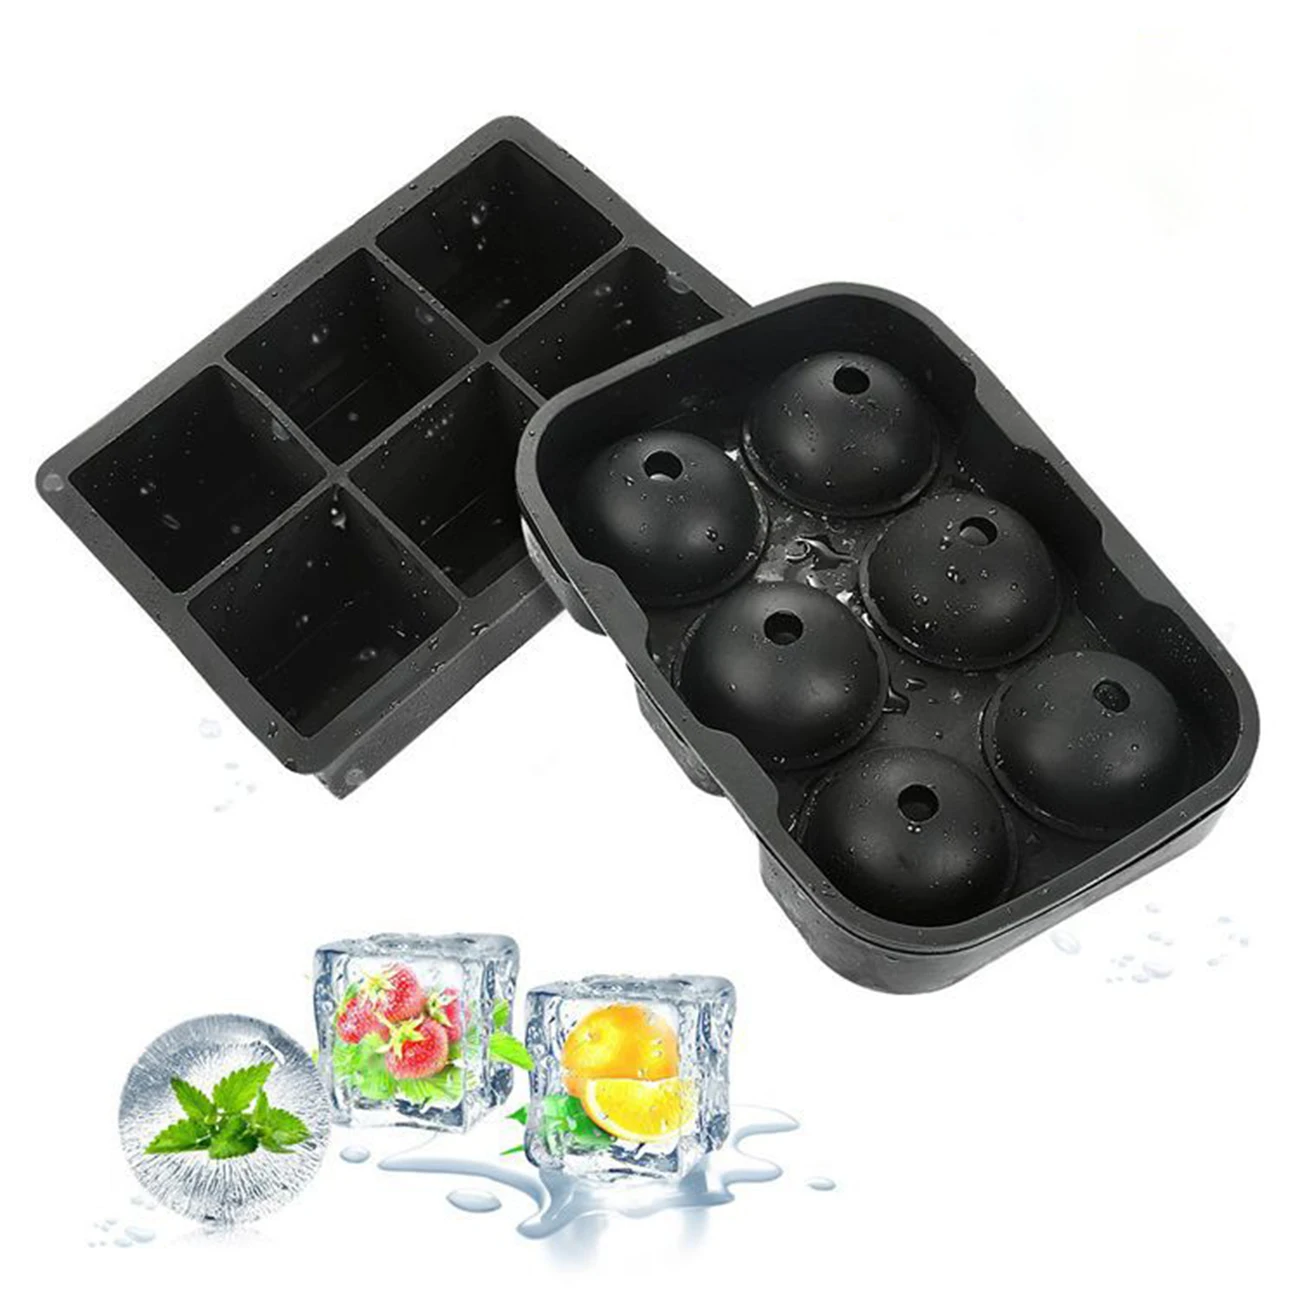 6 Cell Ice Ball Mold Camping Cooler Силиконовые лотки для кубиков льда Виски Ice Ball Maker Силиконовые формы Maker Camp Cooking Supplies